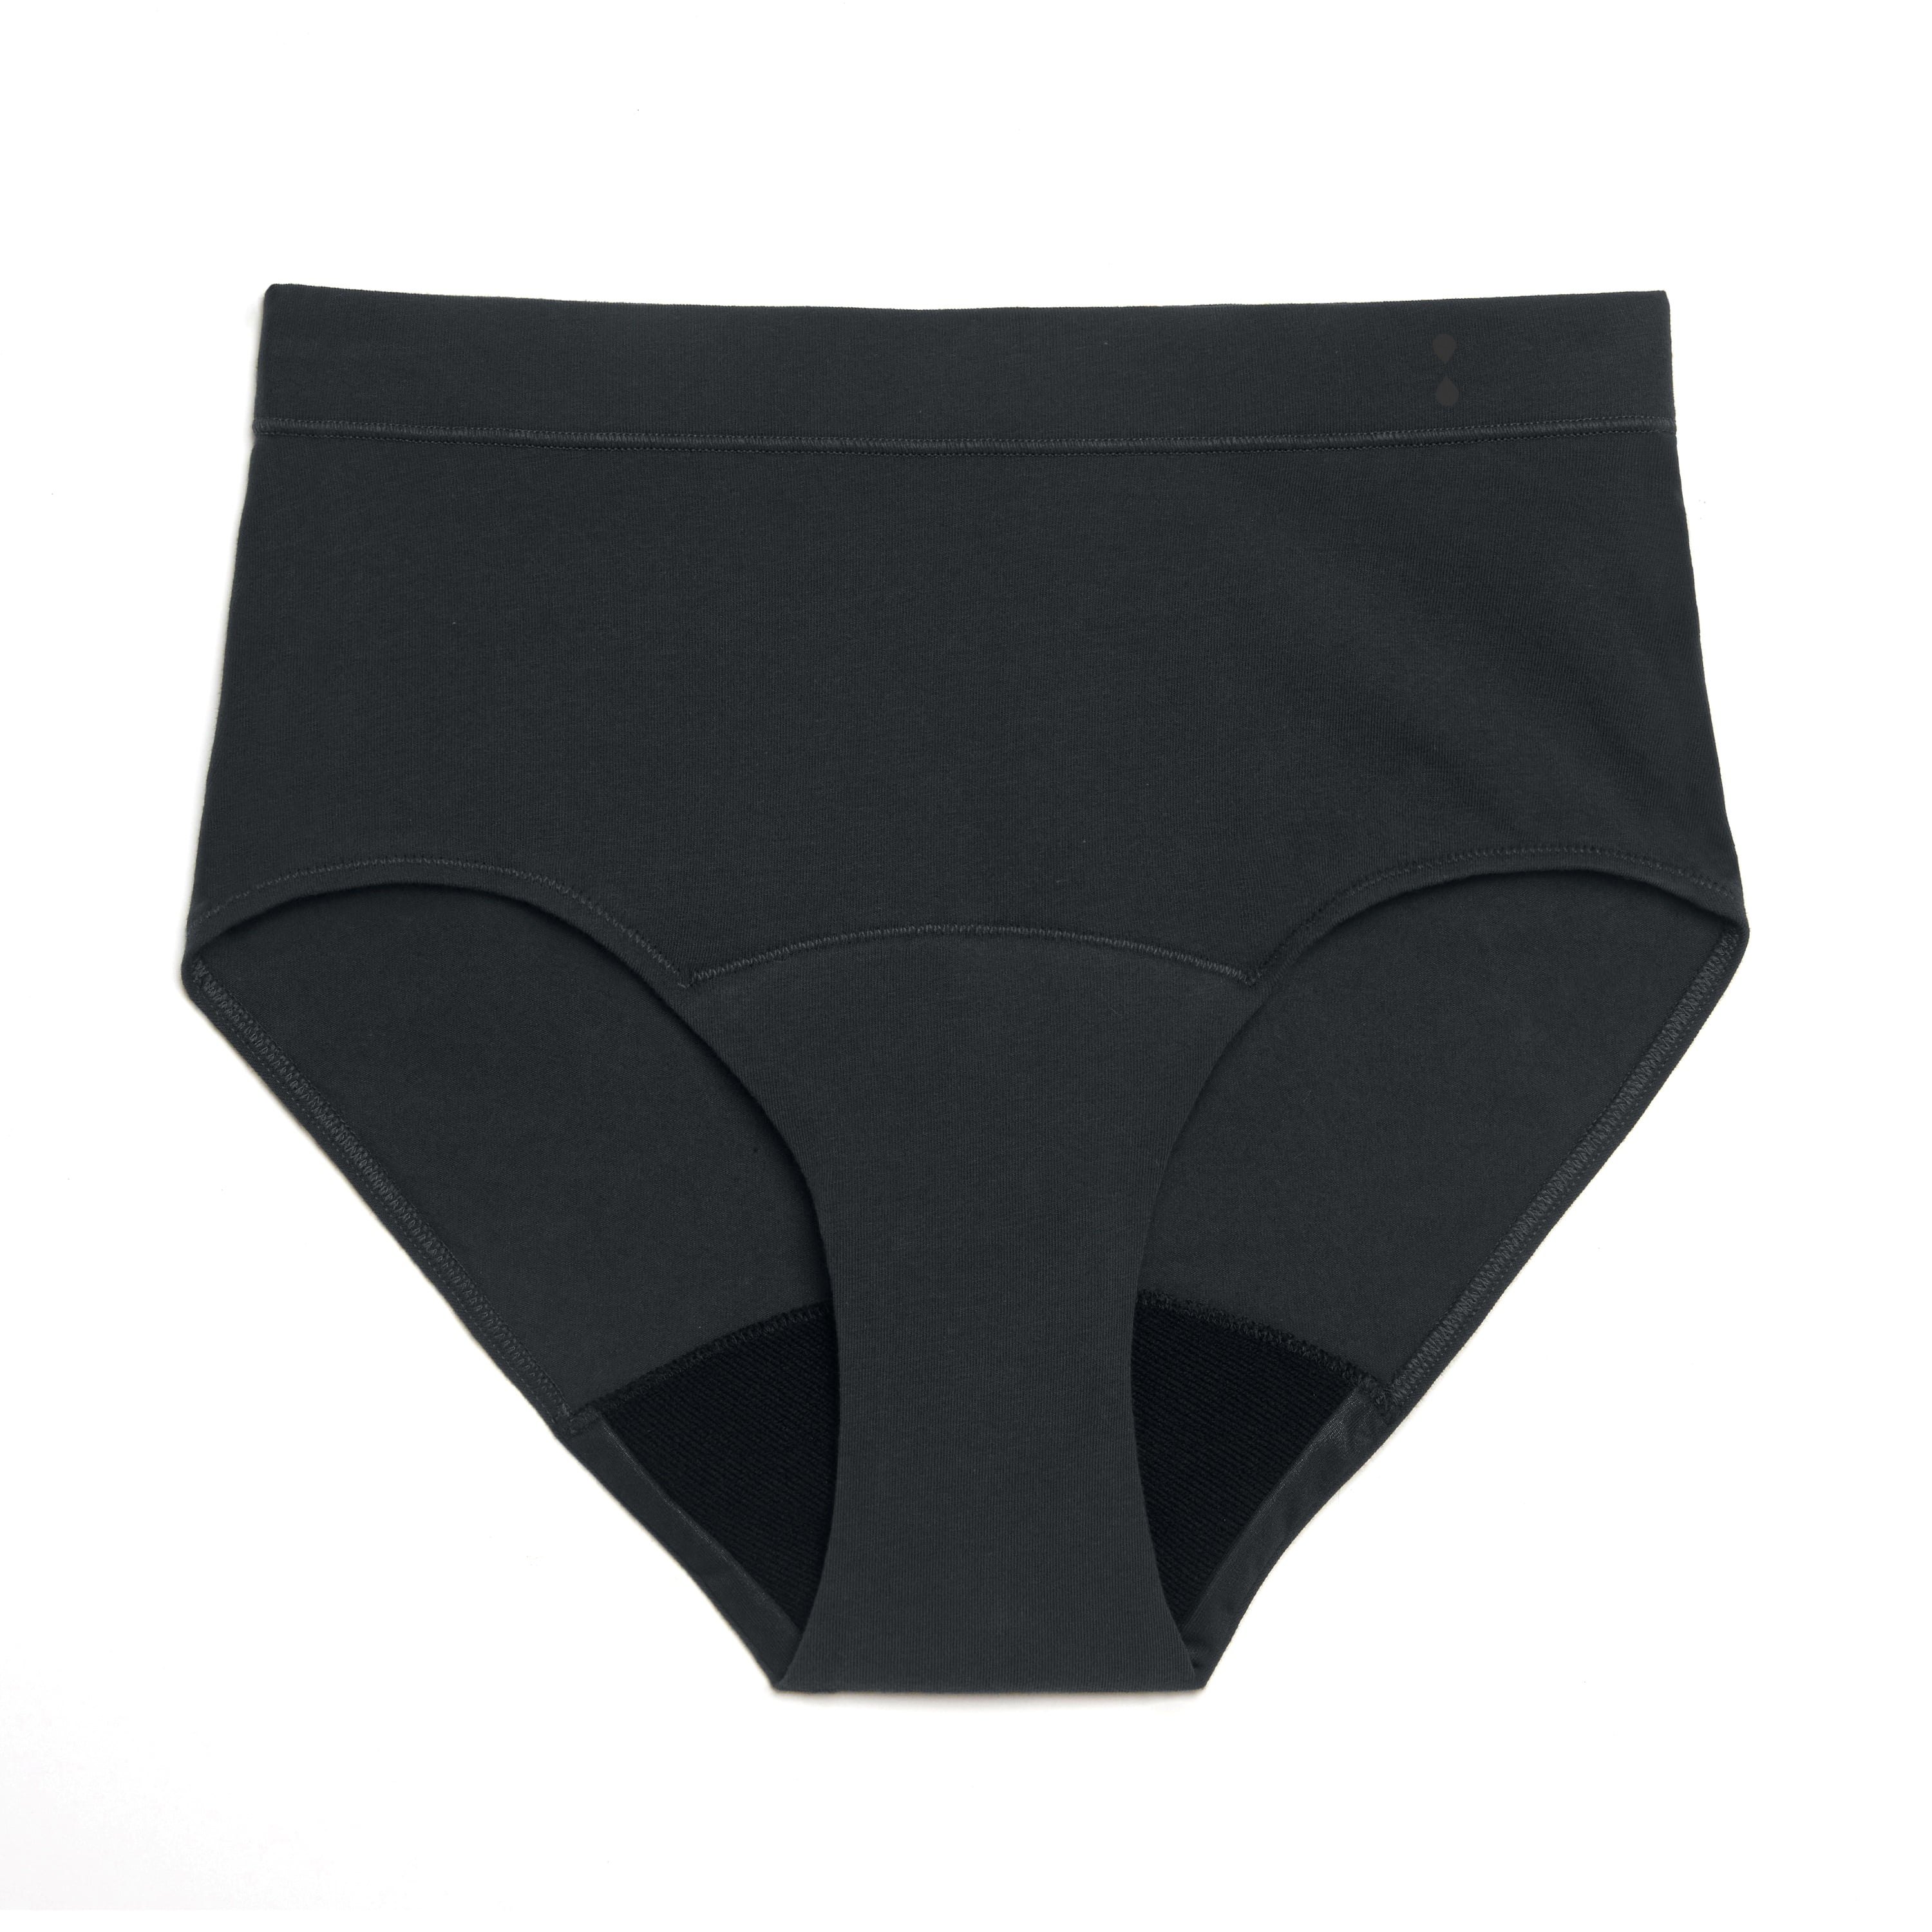 Buy AllMatters Period Underwear XS (1pc)